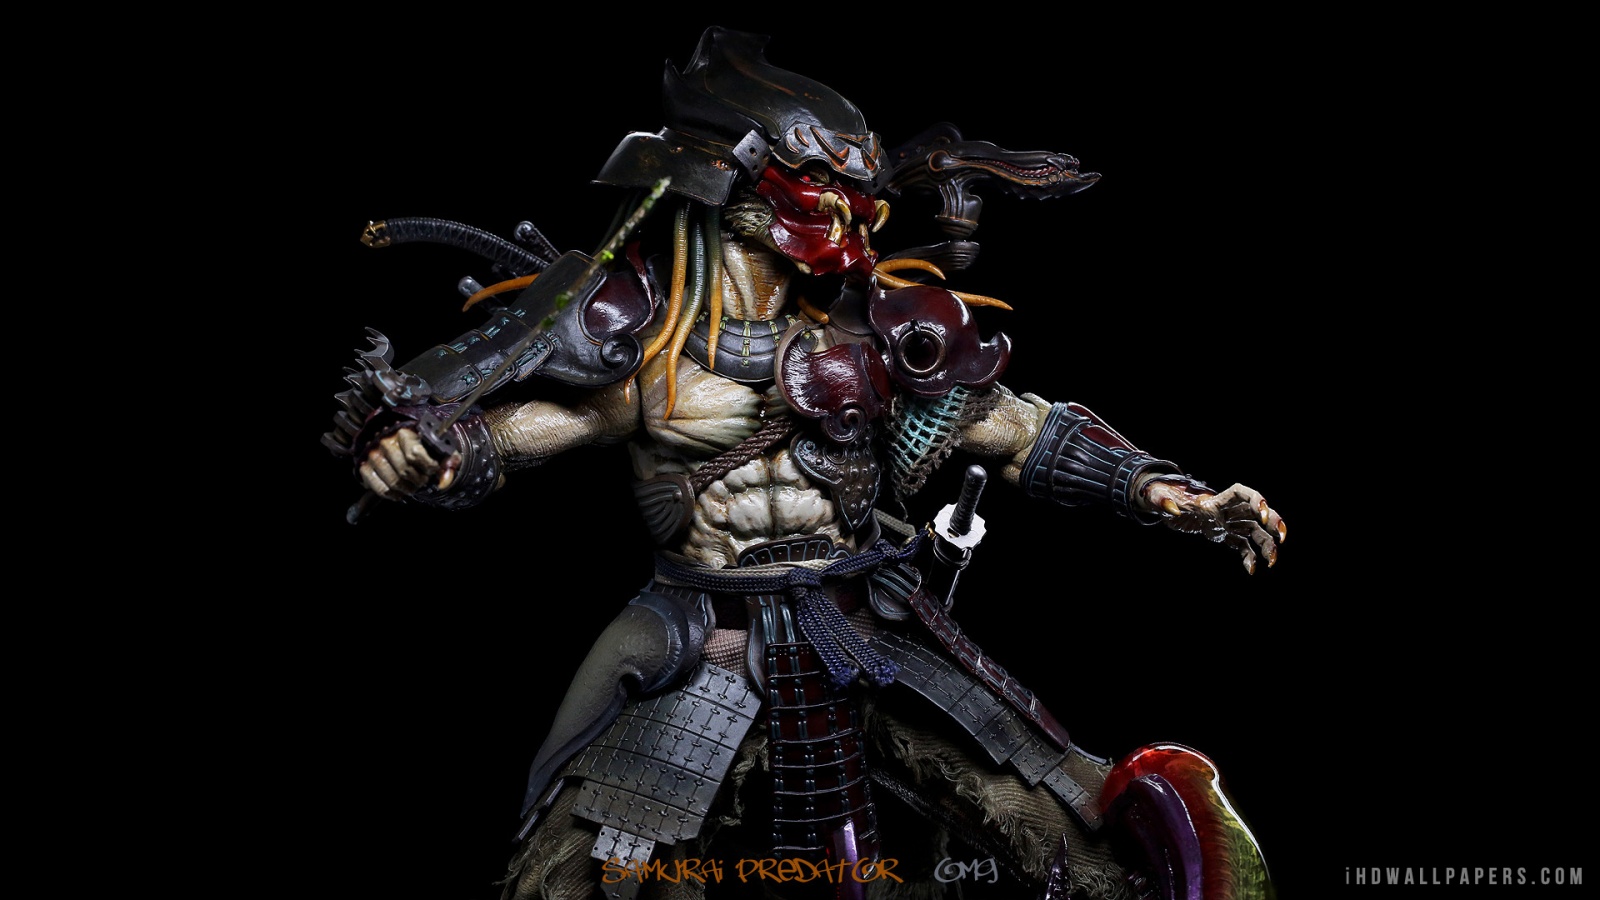 Samurai Predator HD Wallpaper IHD